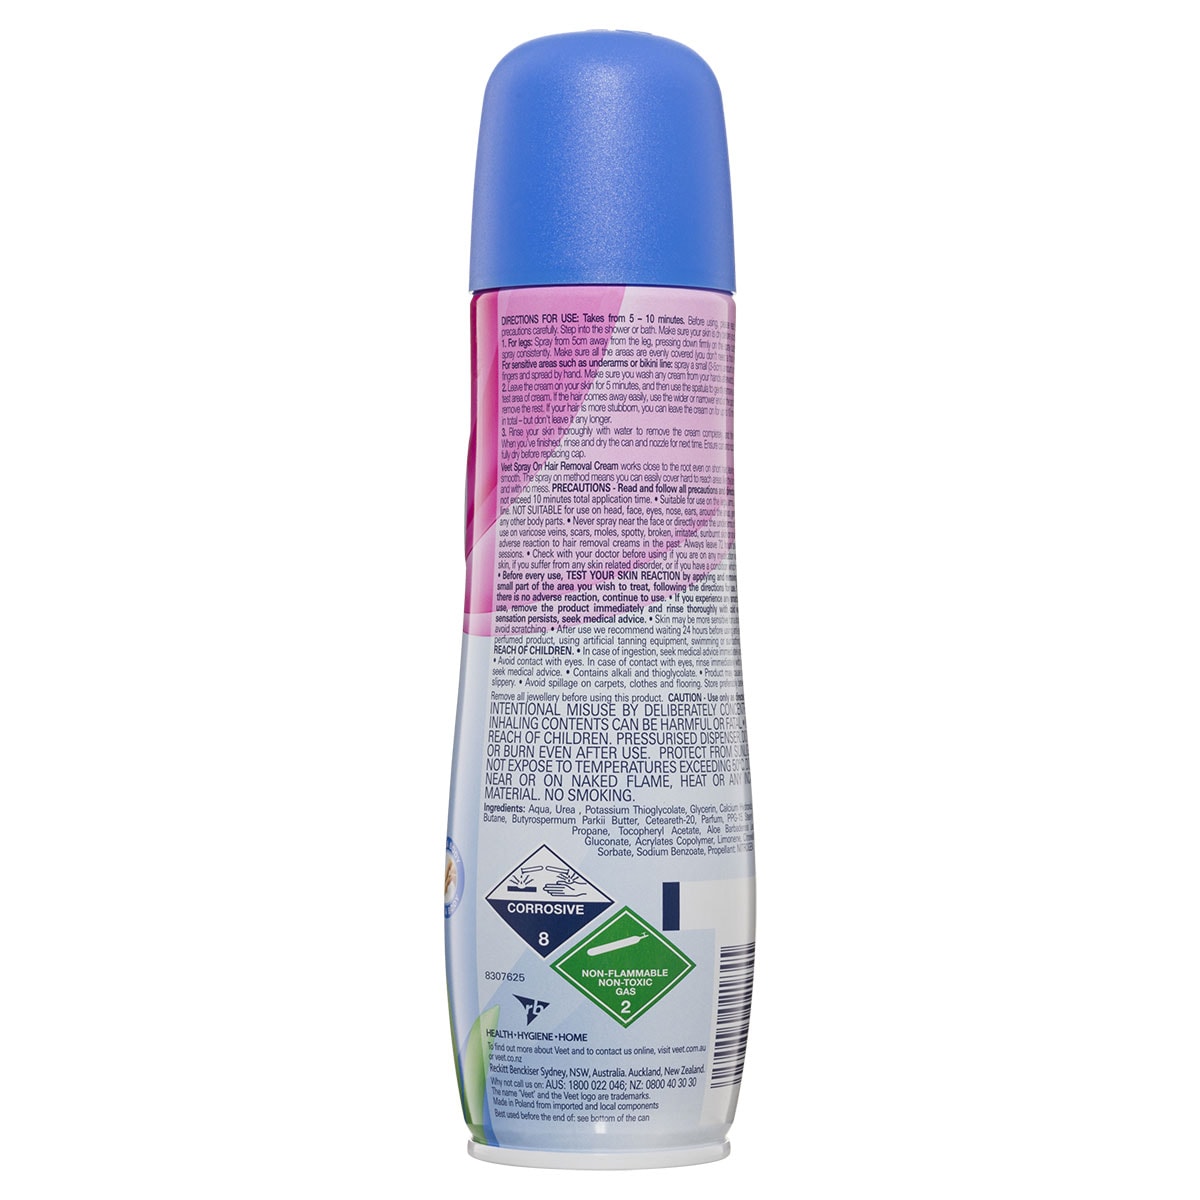 Veet Spray On Cream for Hair Removal Sensitive 150g